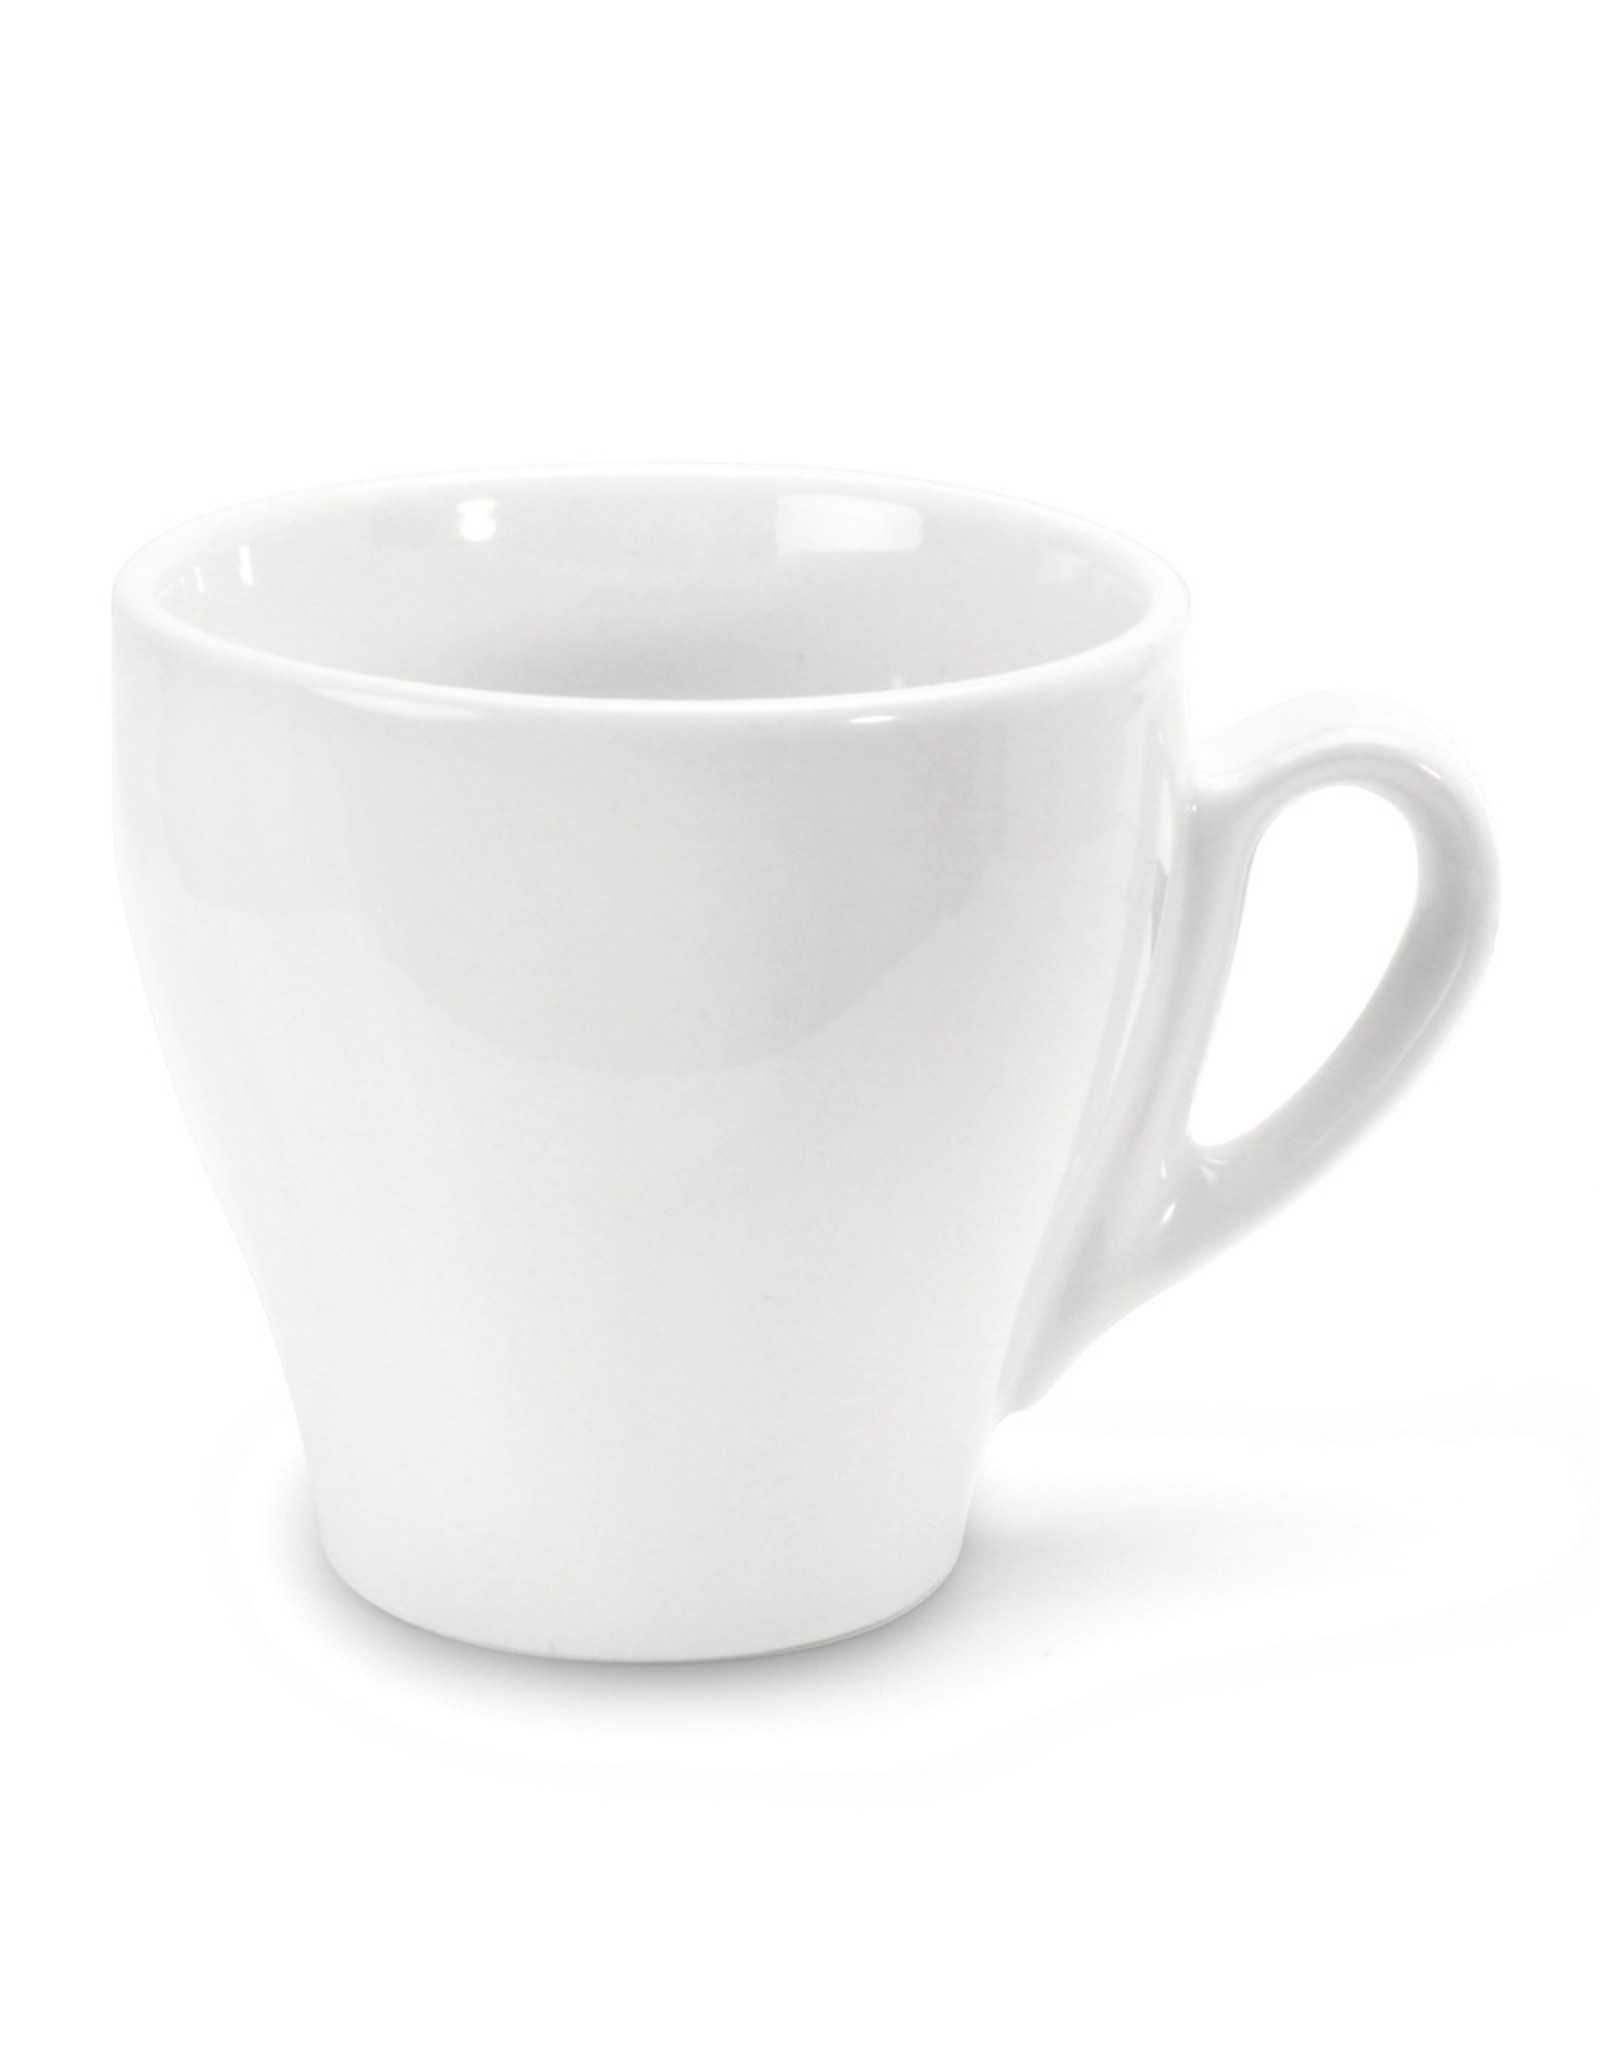 Danesco Coffee & Tea Tasse à café cappuccino allongé blanche 235mL